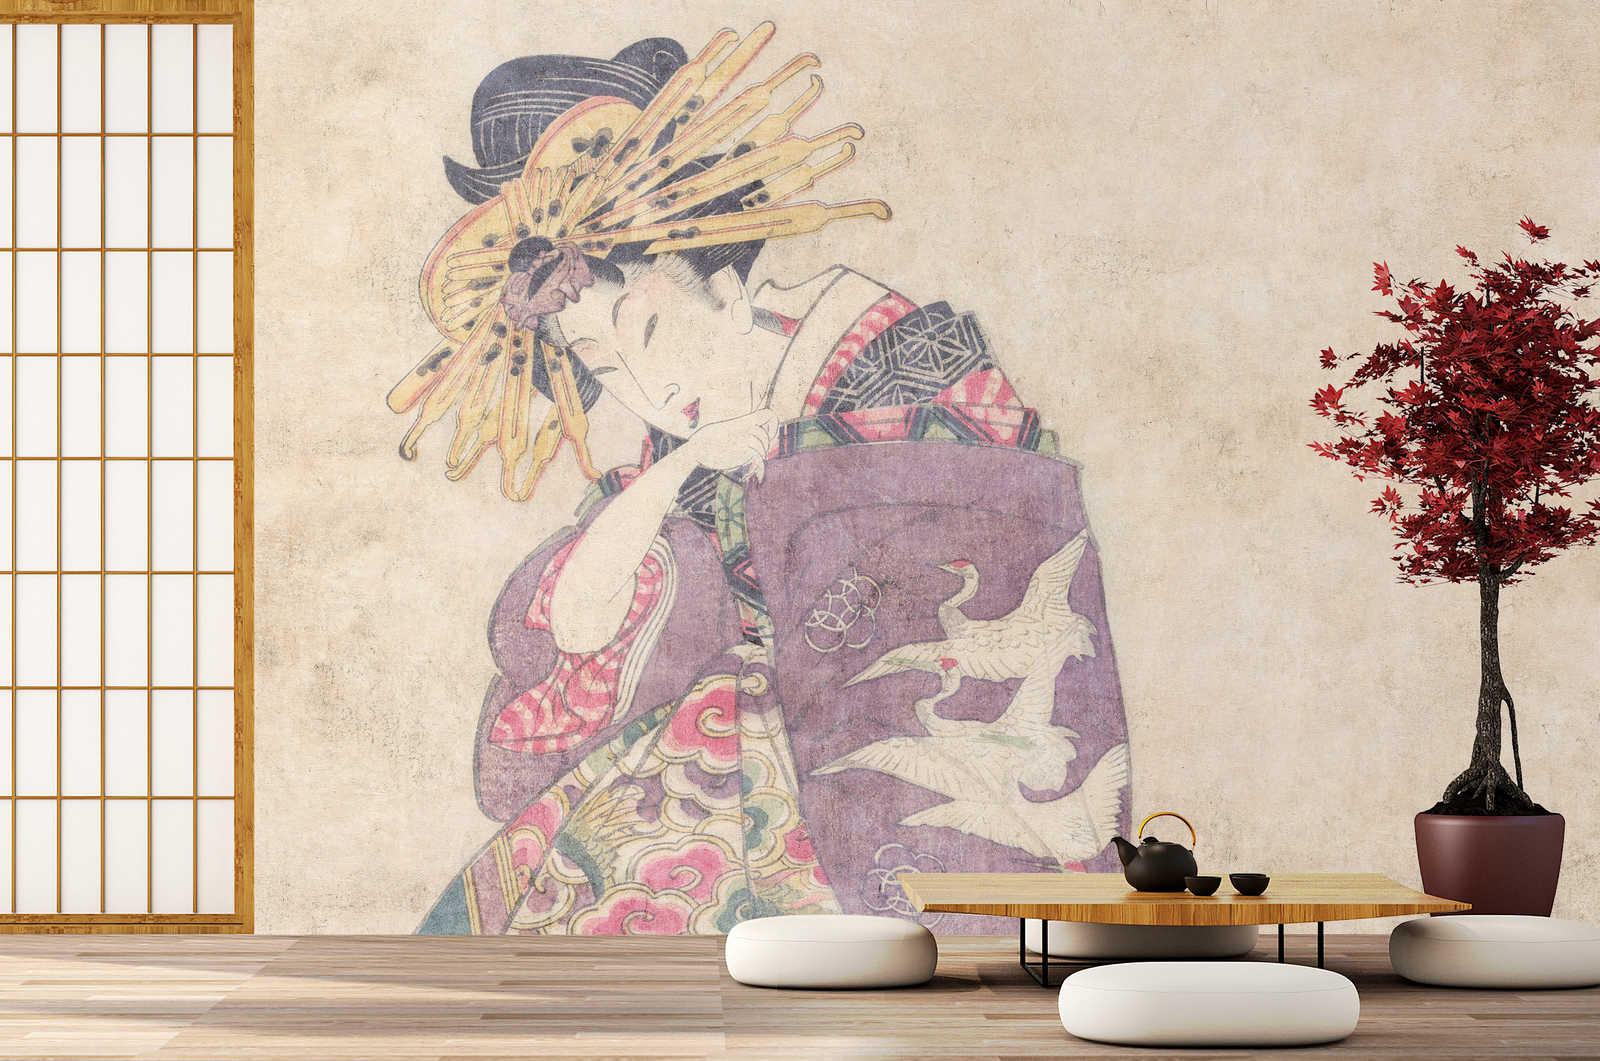             Osaka 1 - art print mural Asian decor in vintage style
        